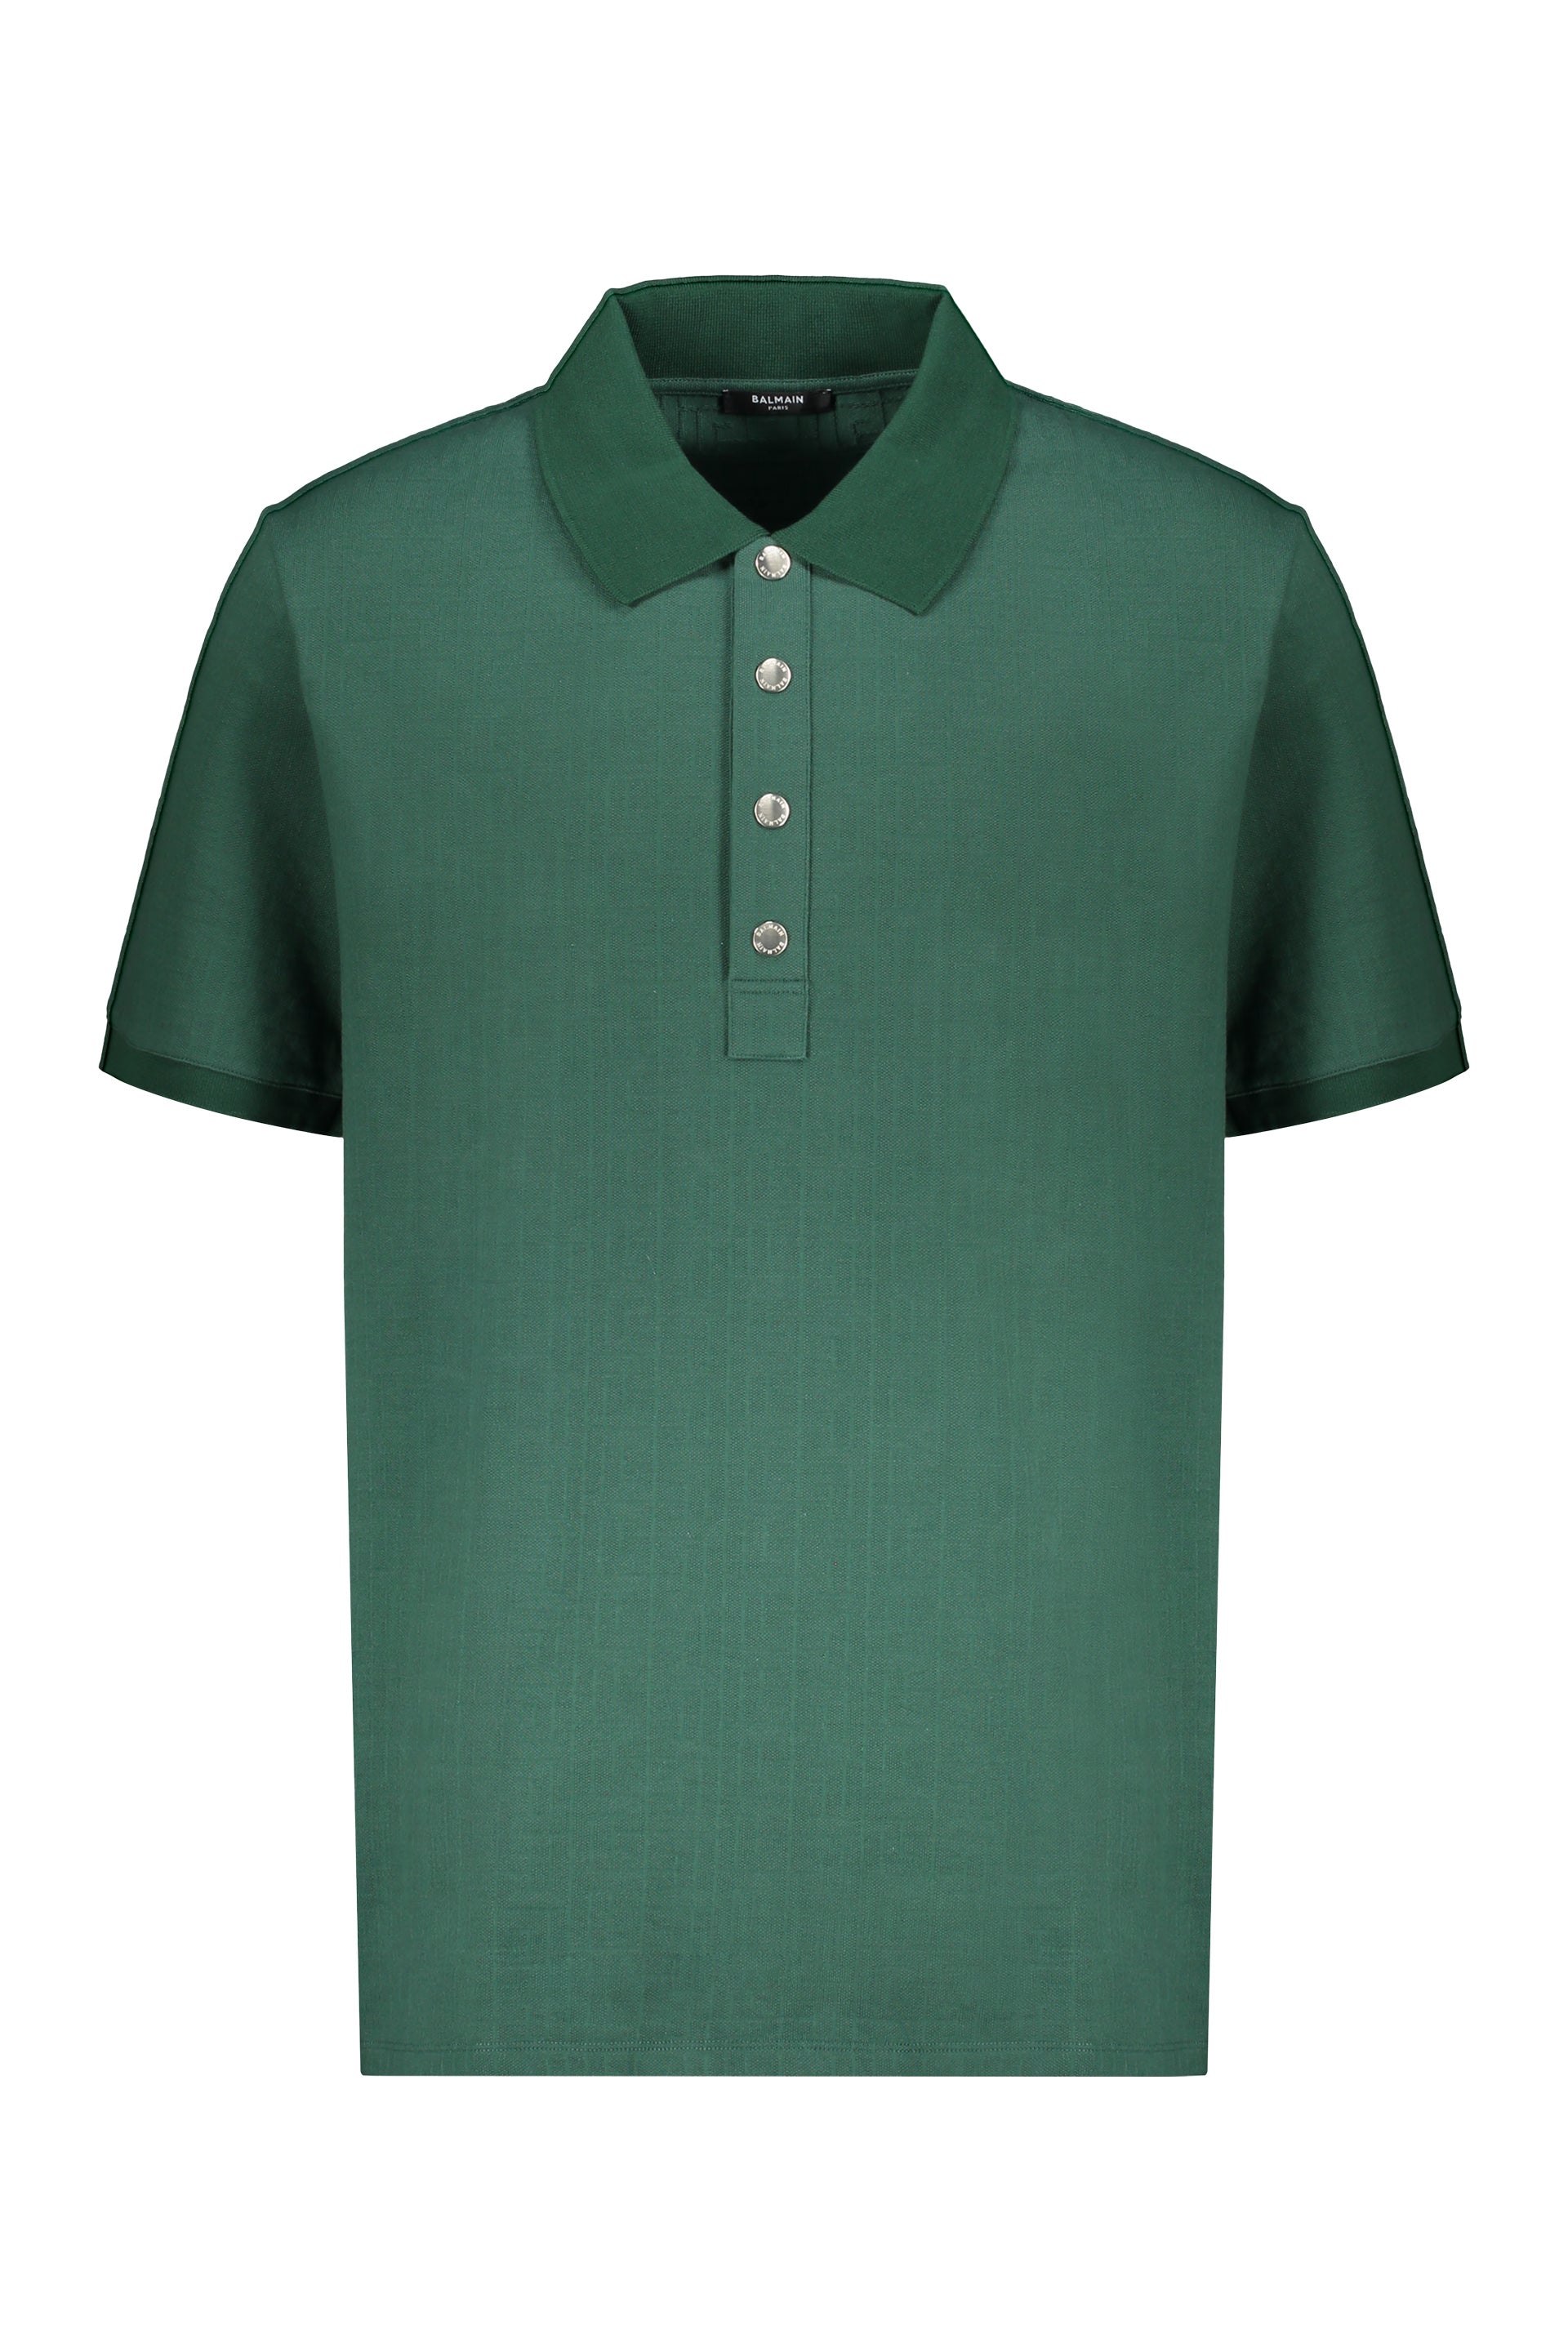 Balmain-OUTLET-SALE-Cotton-polo-shirt-Shirts-L-ARCHIVE-COLLECTION.jpg